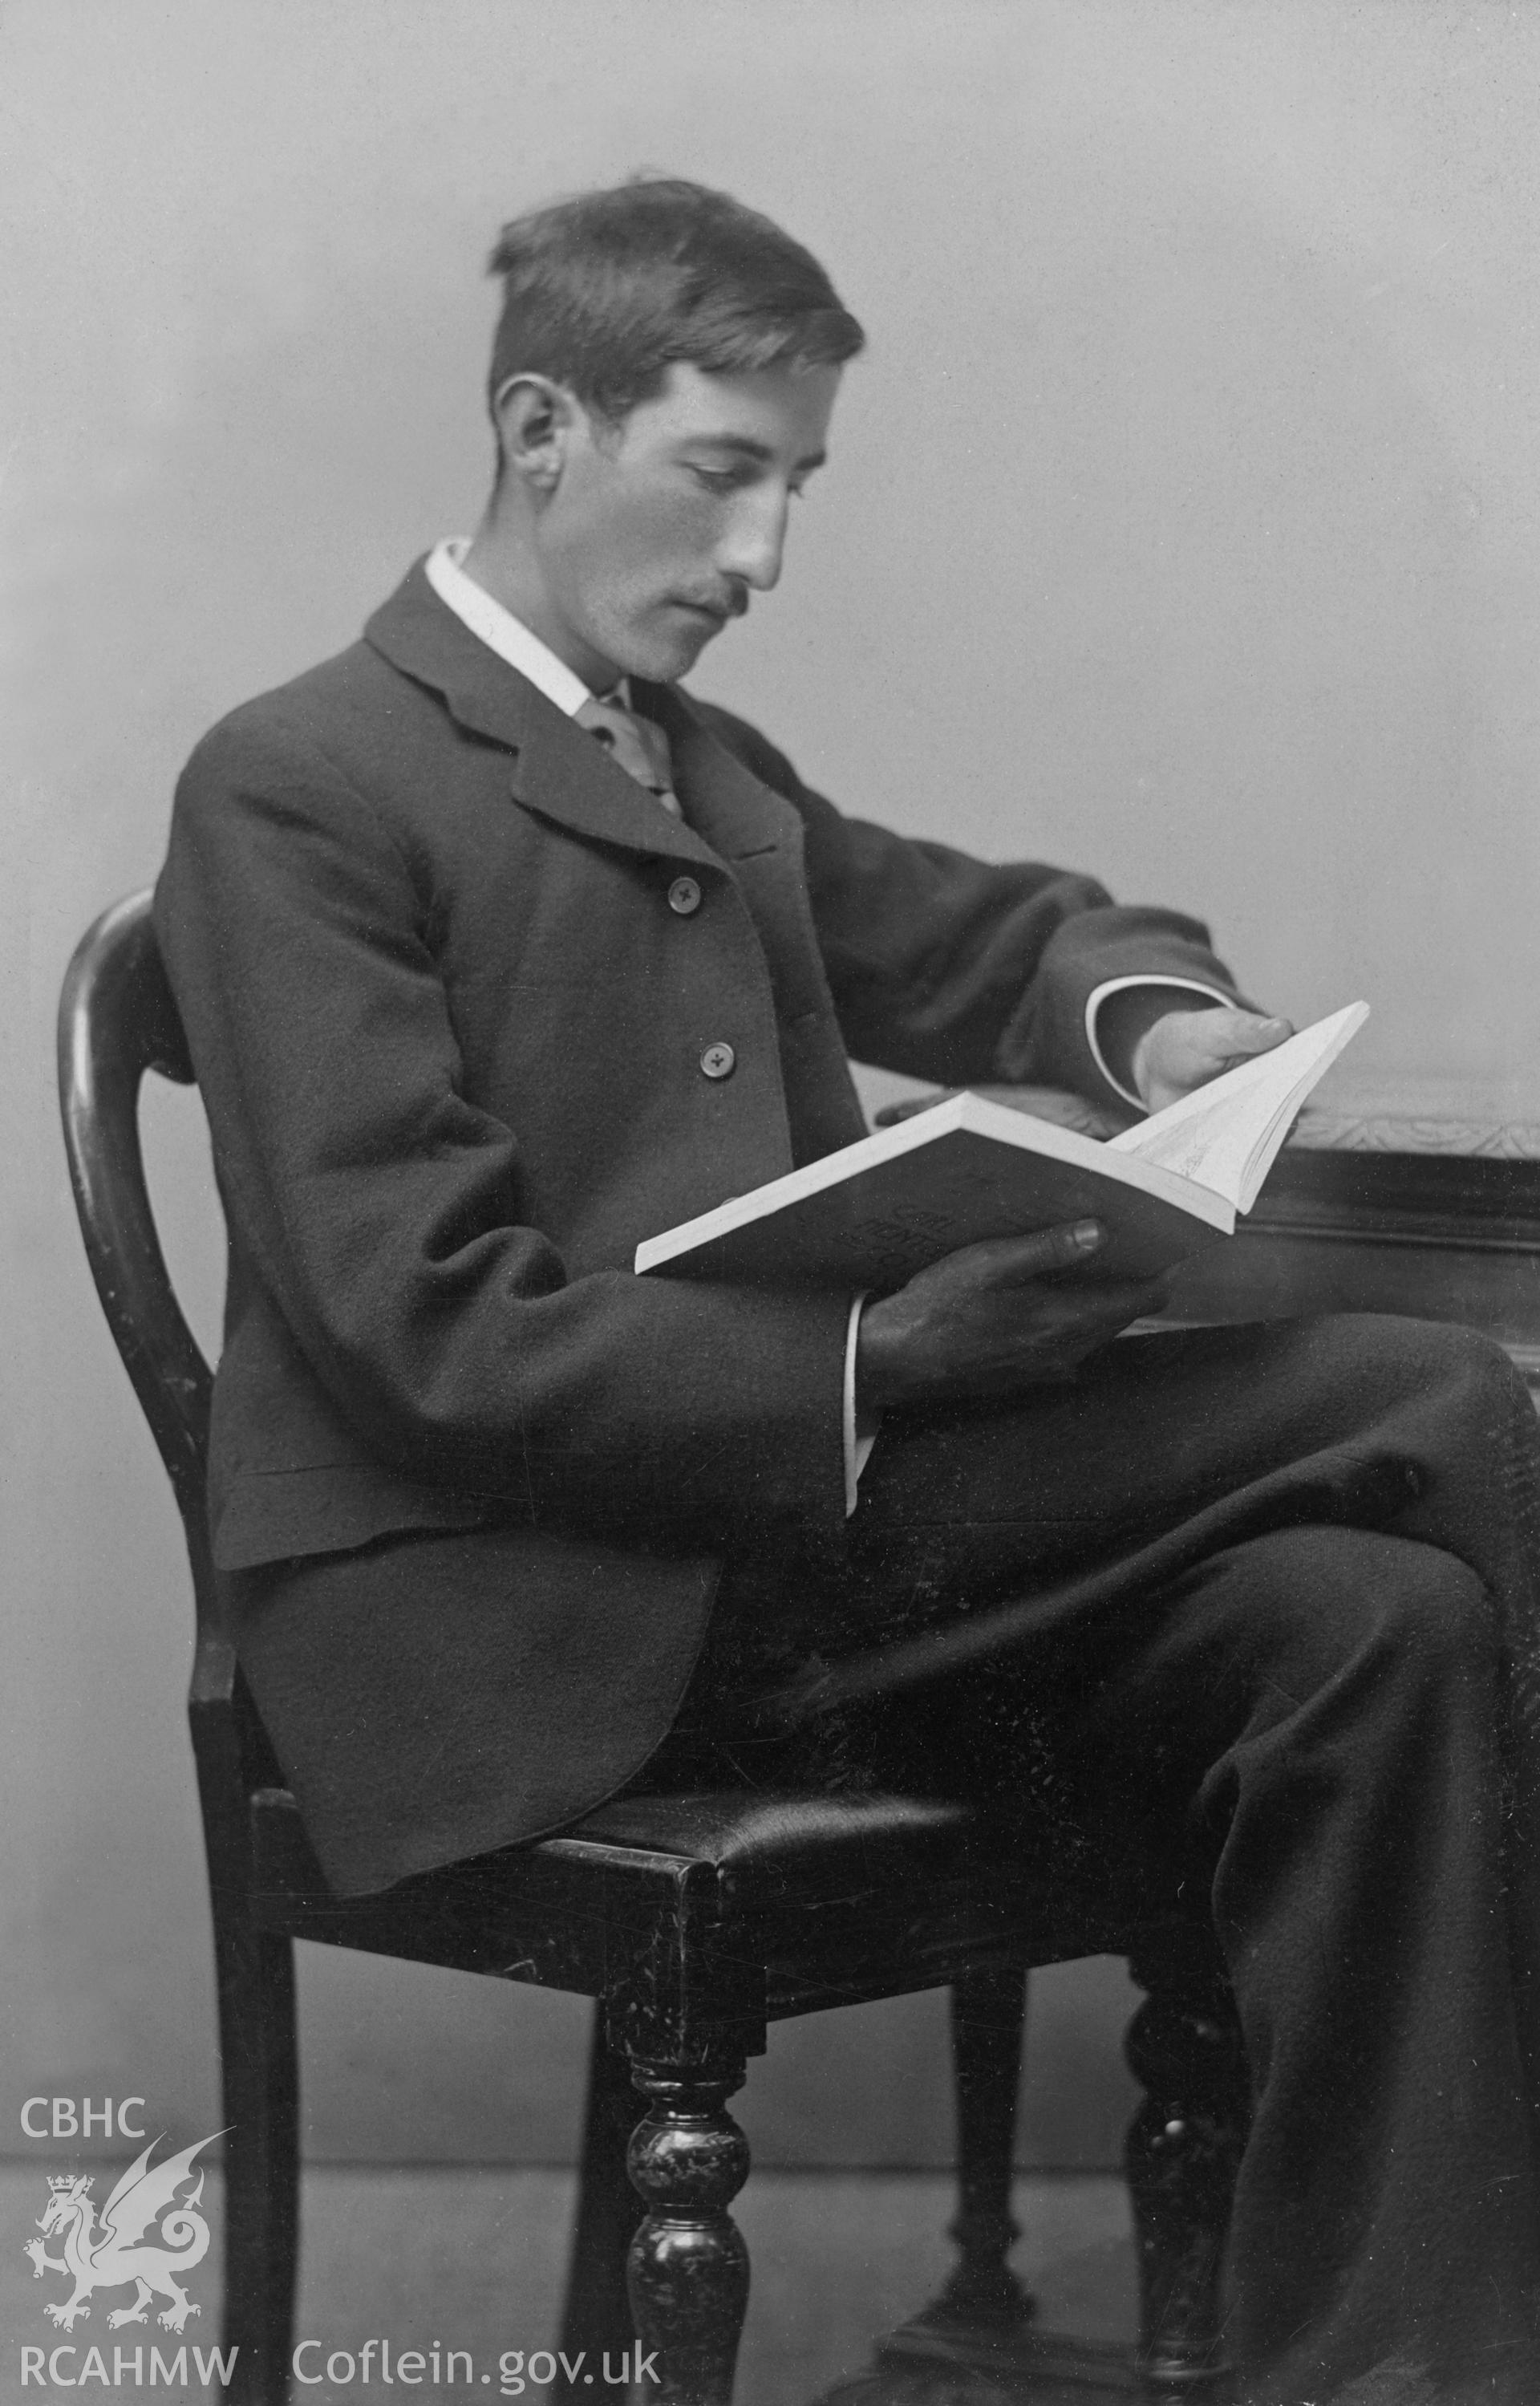 Photographic portrait of Herbert North, seated.